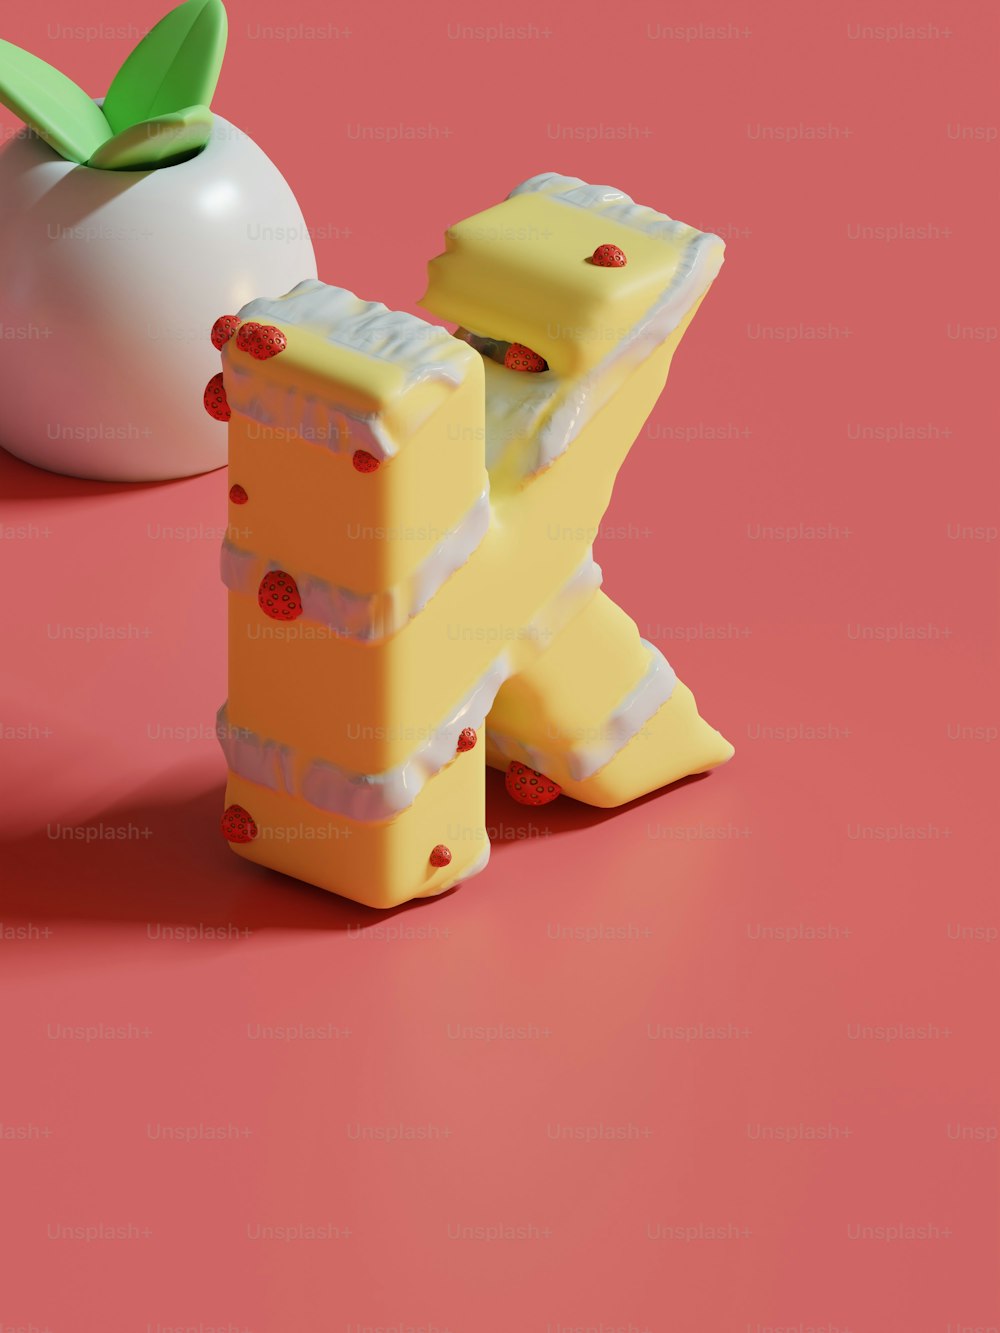 un pezzo di formaggio seduto accanto a una mela su una superficie rosa